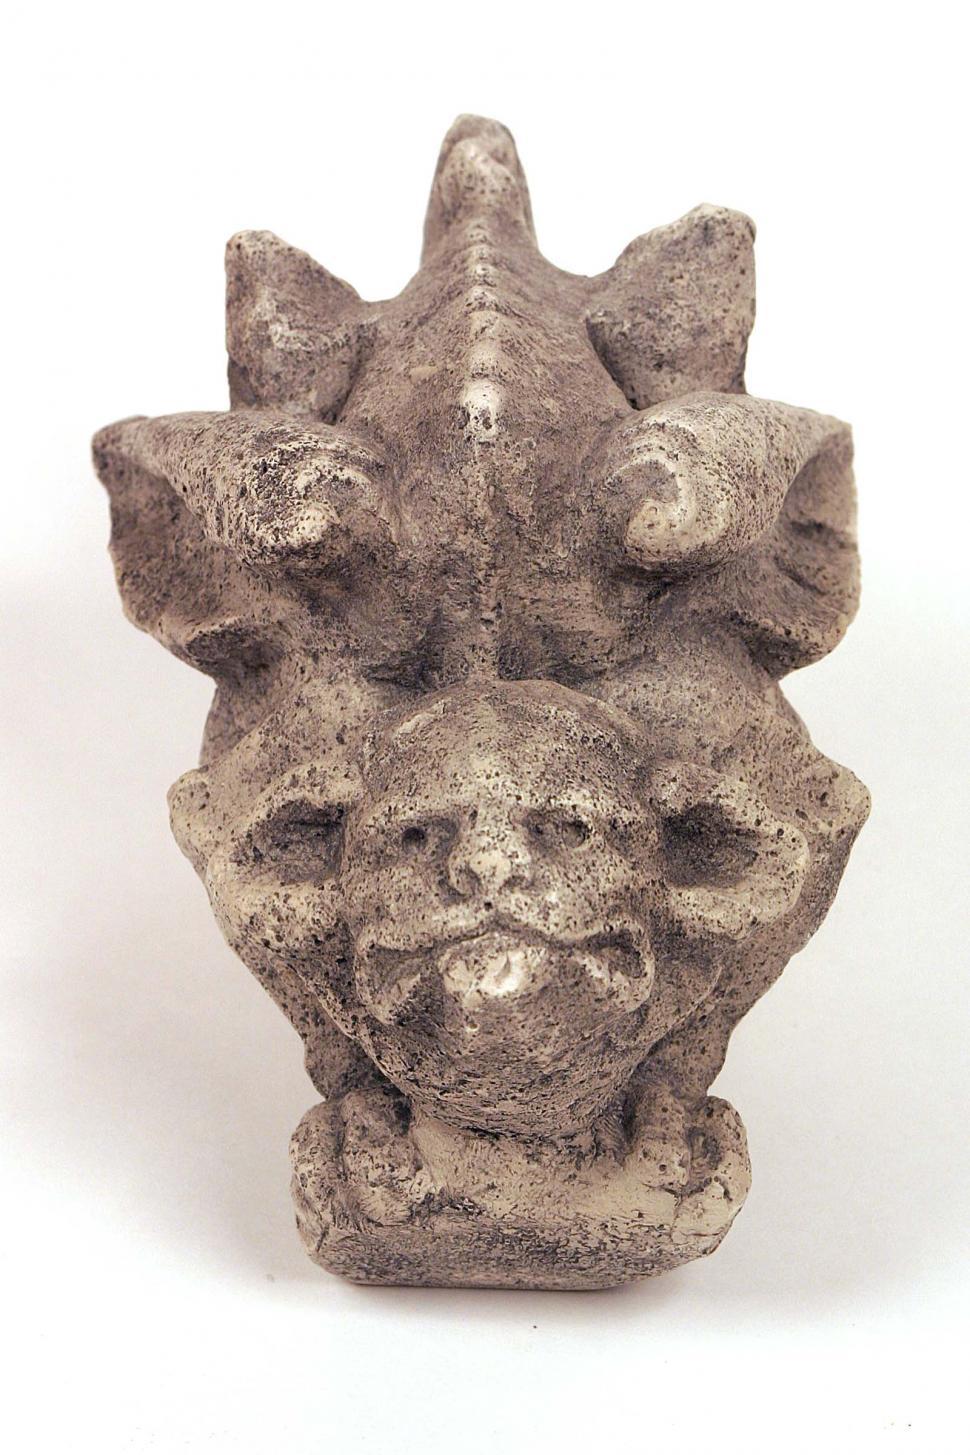 Free Image of object gargoyle face monster statue sculpture creature 